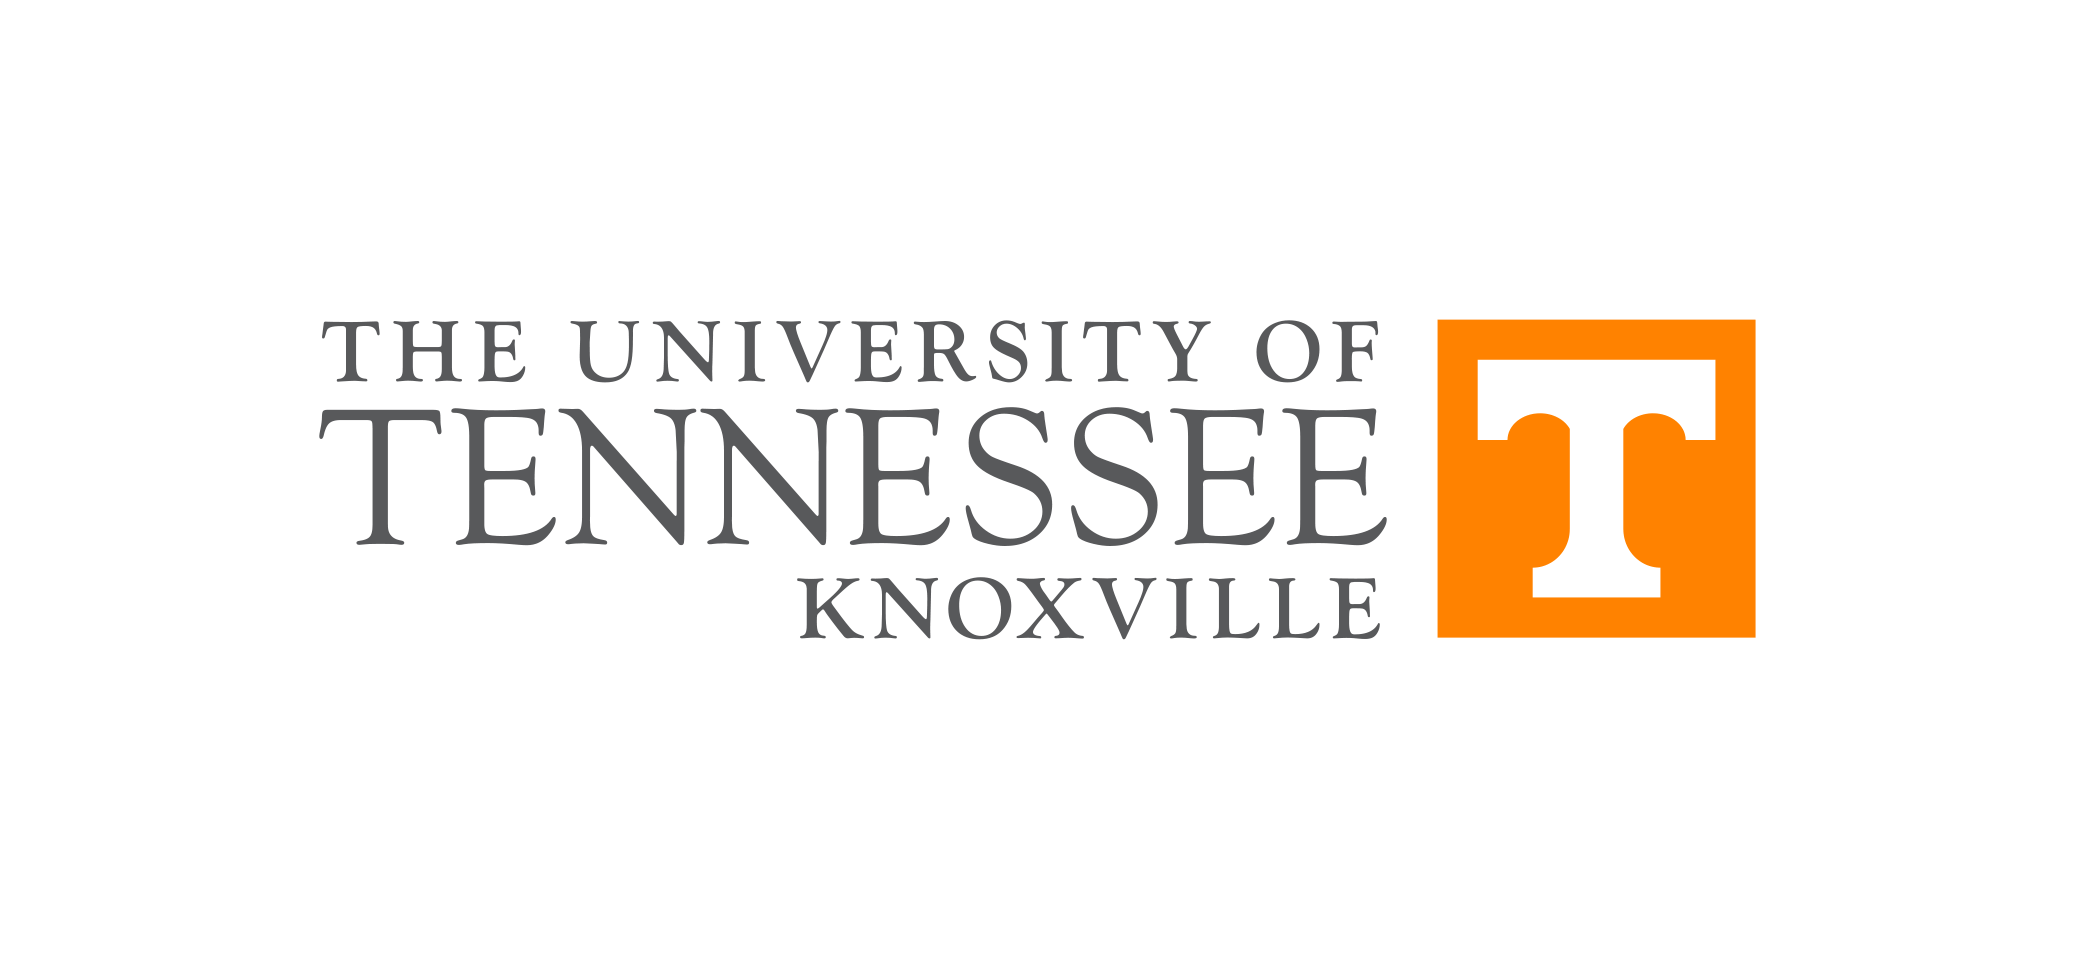 Utk Logo - The University of Tennessee Logo